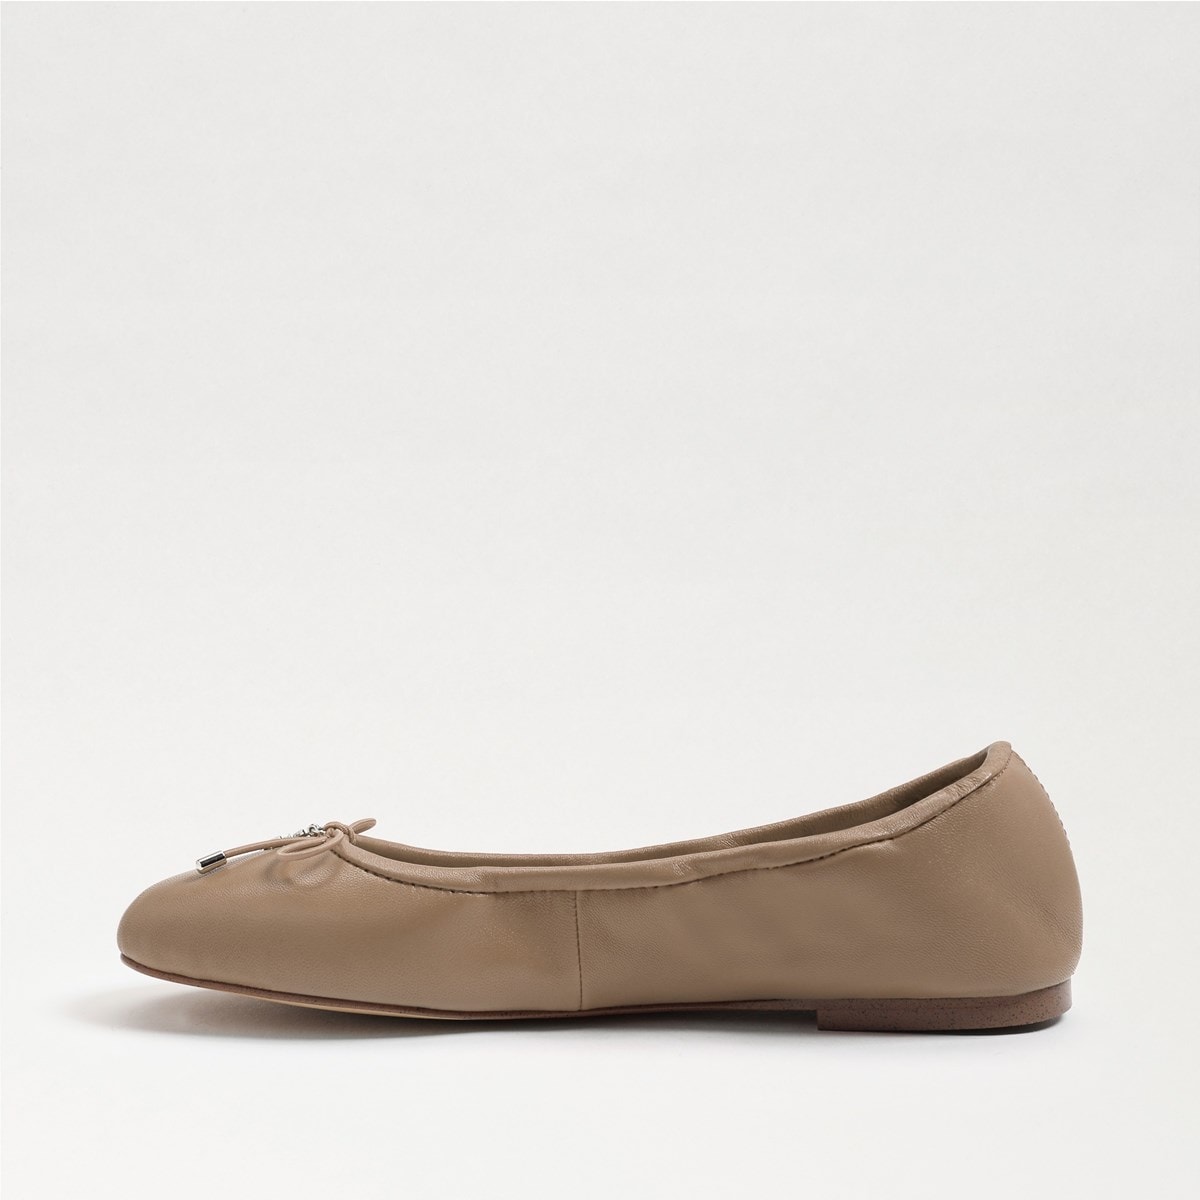 Sam Edelman Felicia Ballet Flat | Women's Flats and Loafers